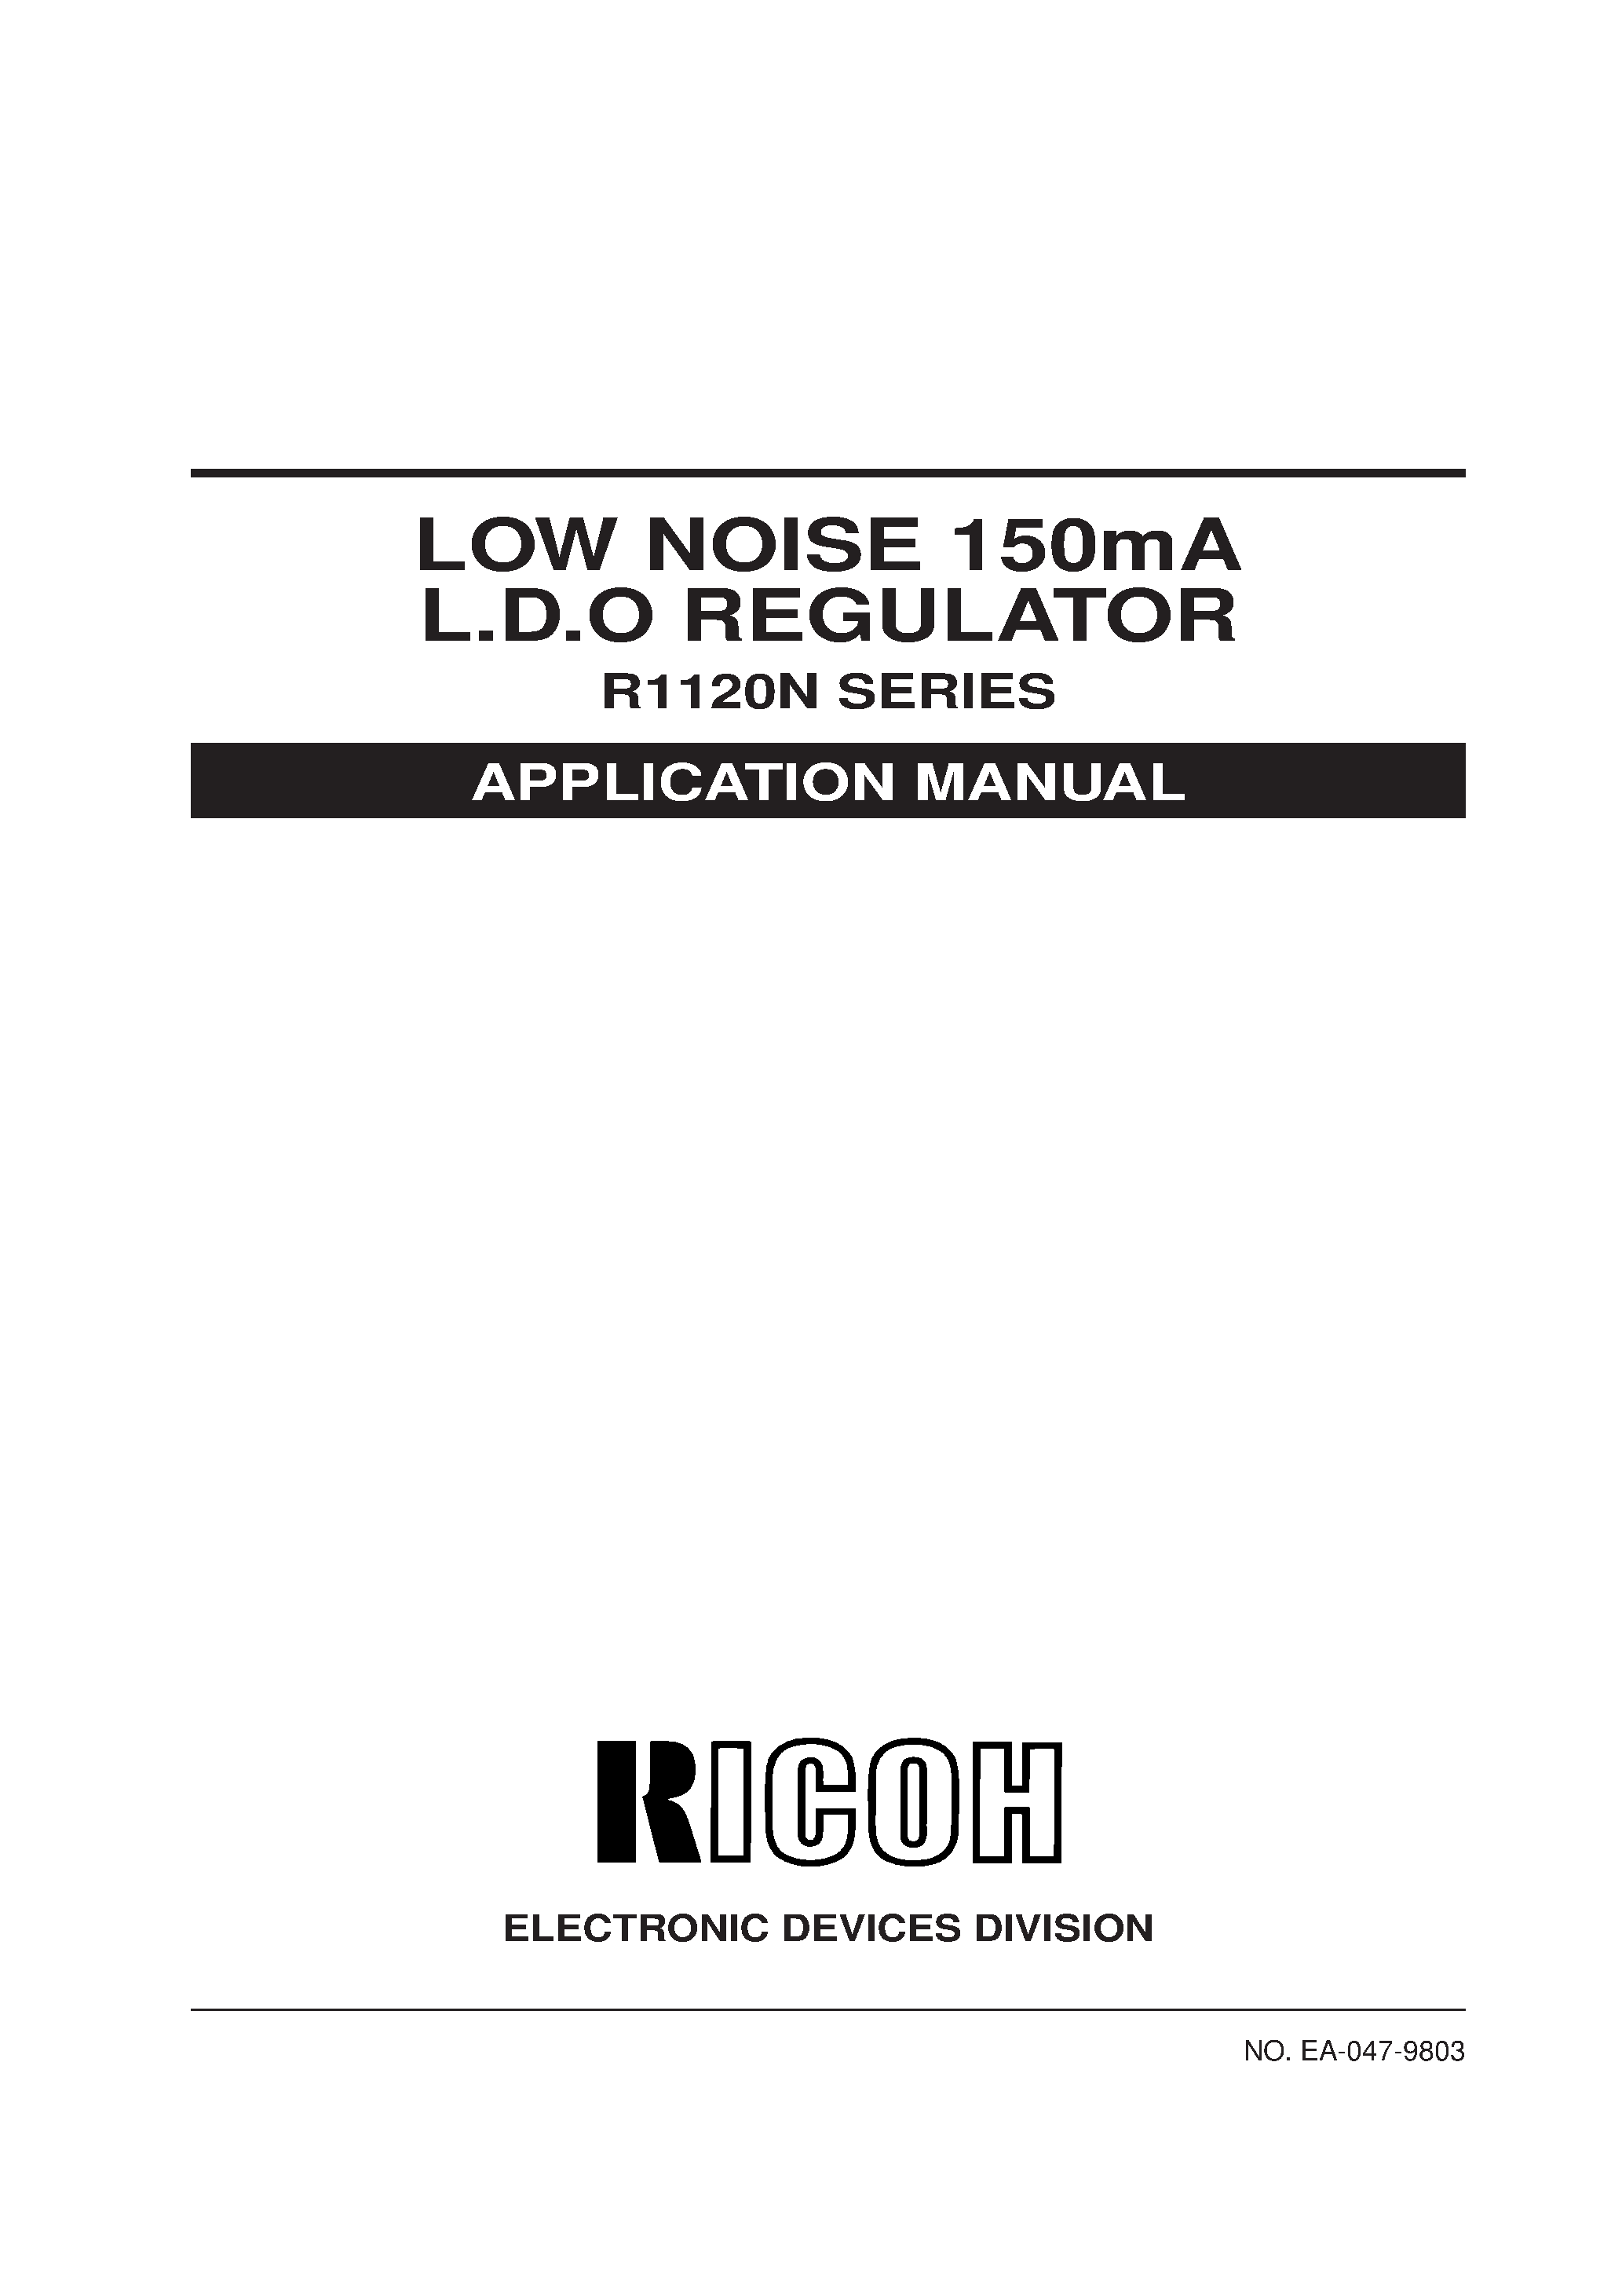 Datasheet R1120N401A-TL - LOW NOISE 150mA L.D.O REGULATOR page 1